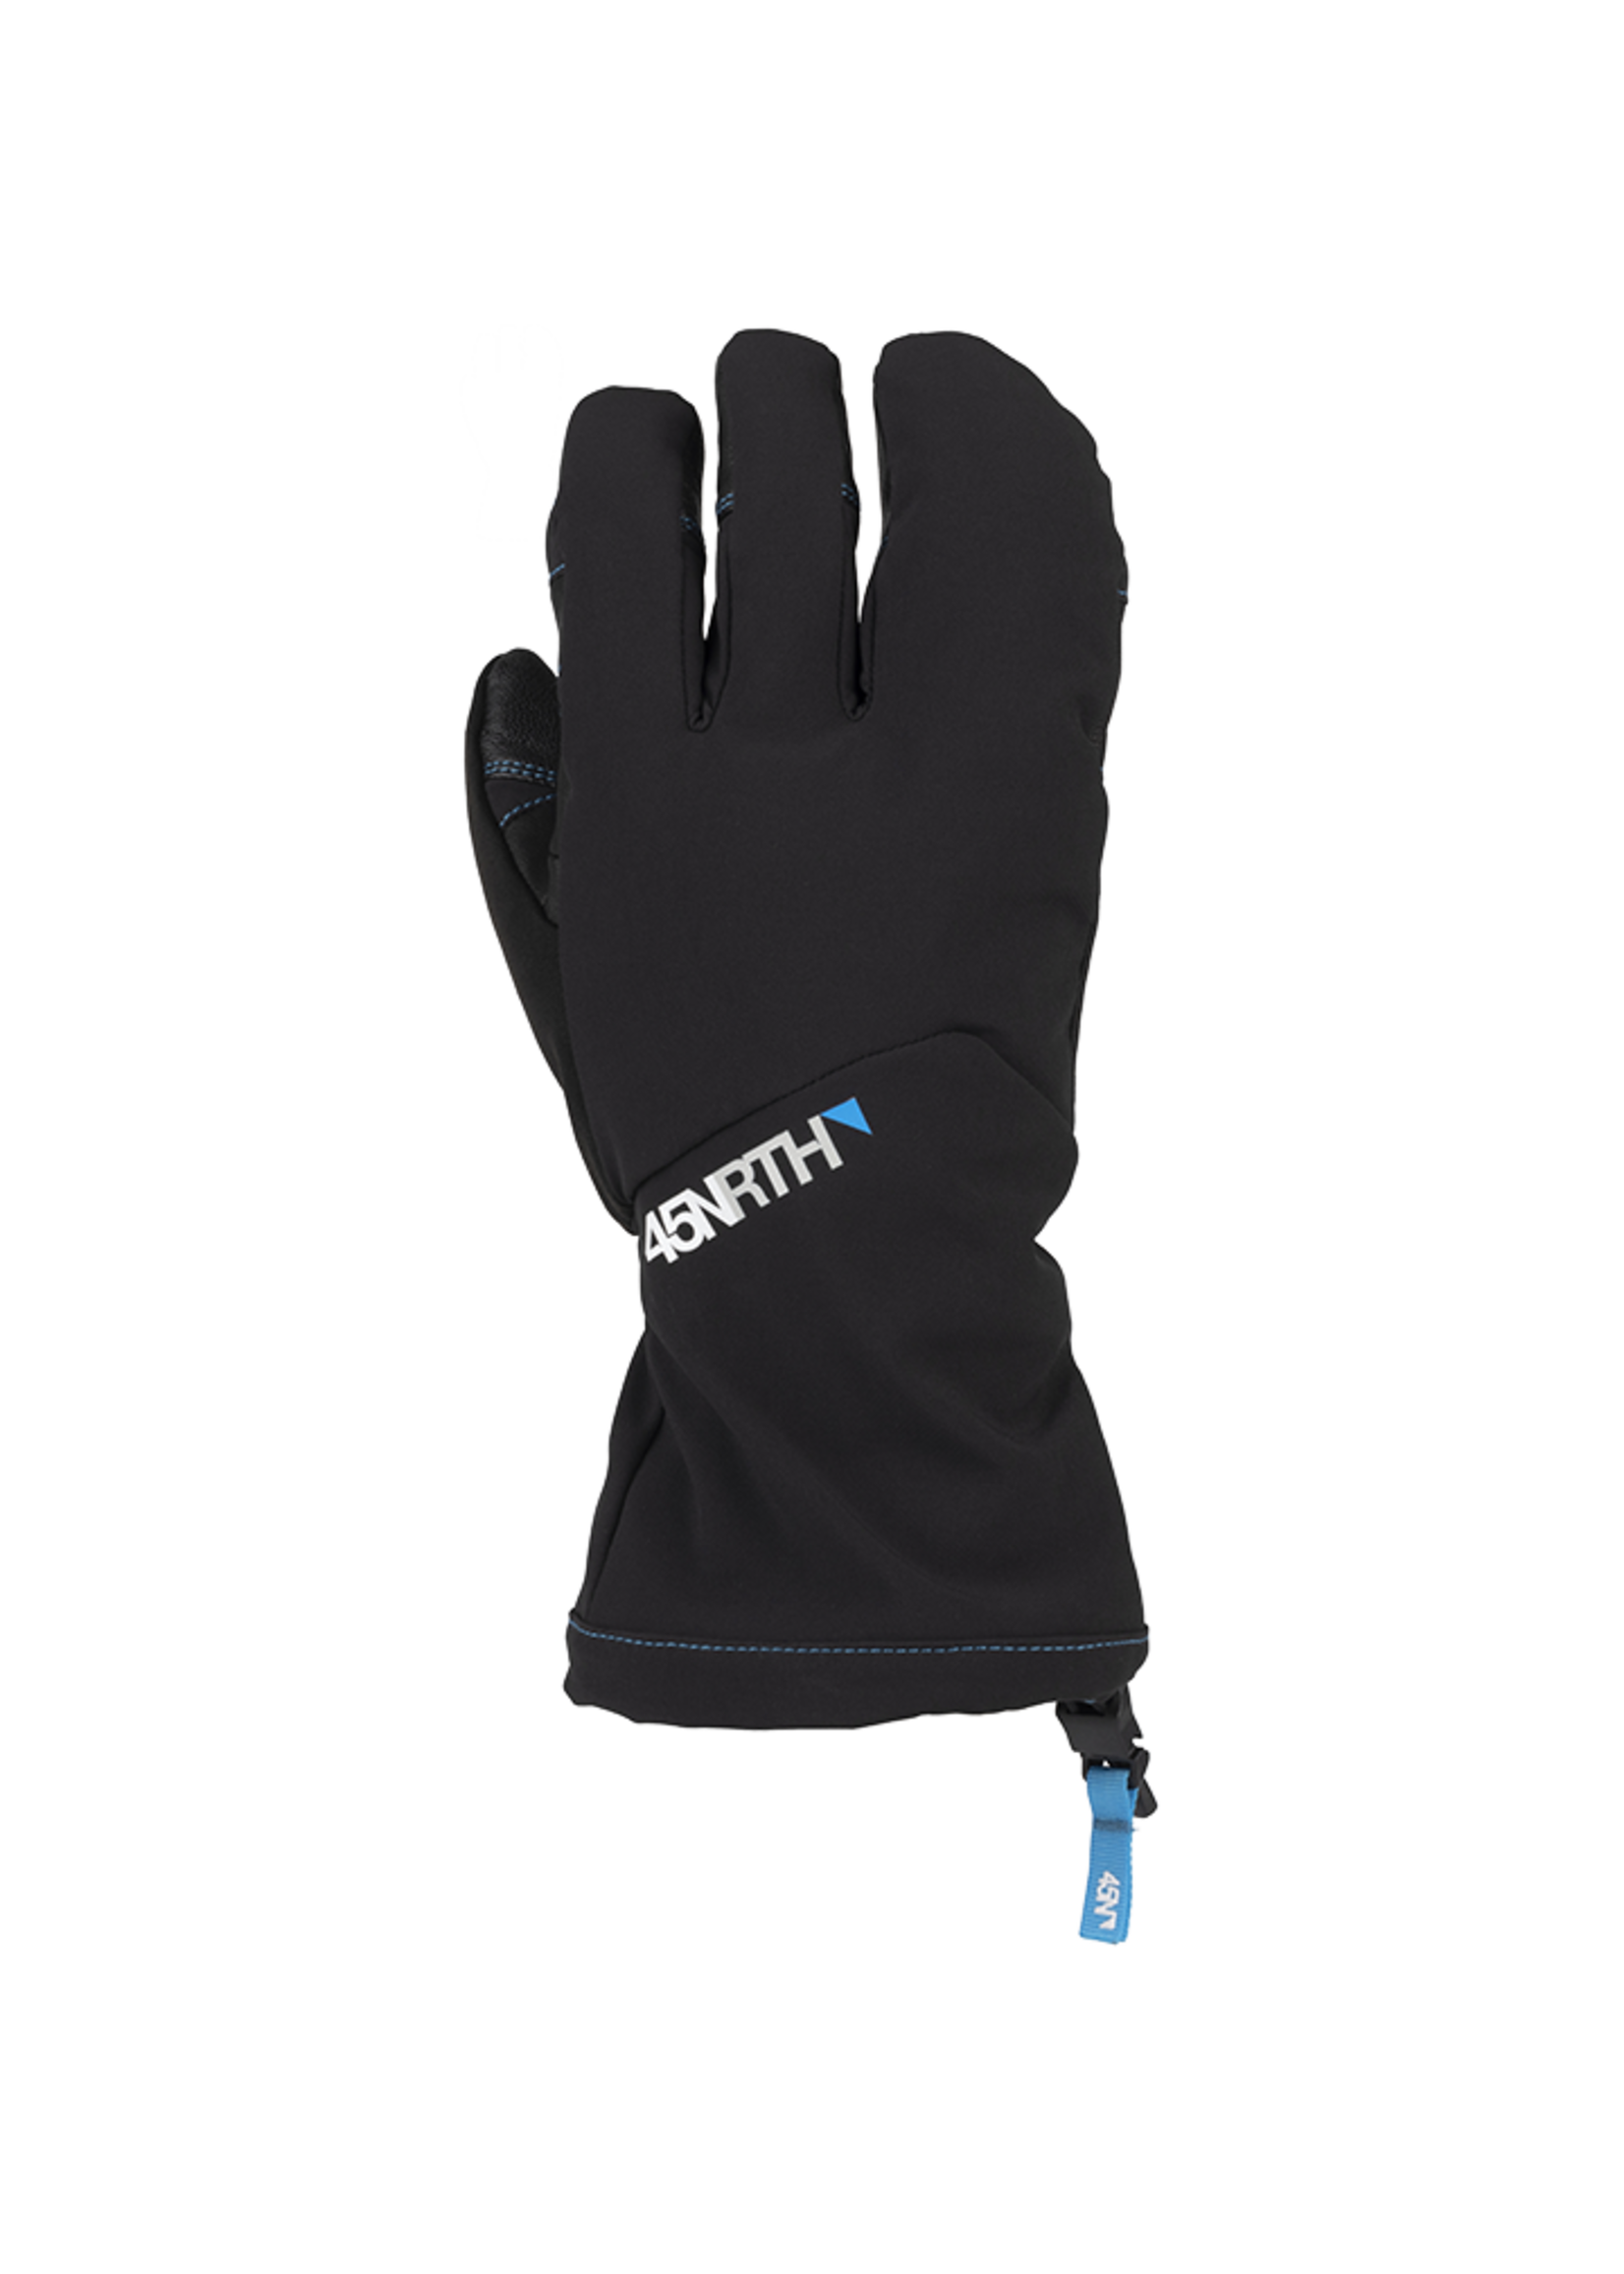 45NRTH 45NRTH Sturmfist 4 Glove Black